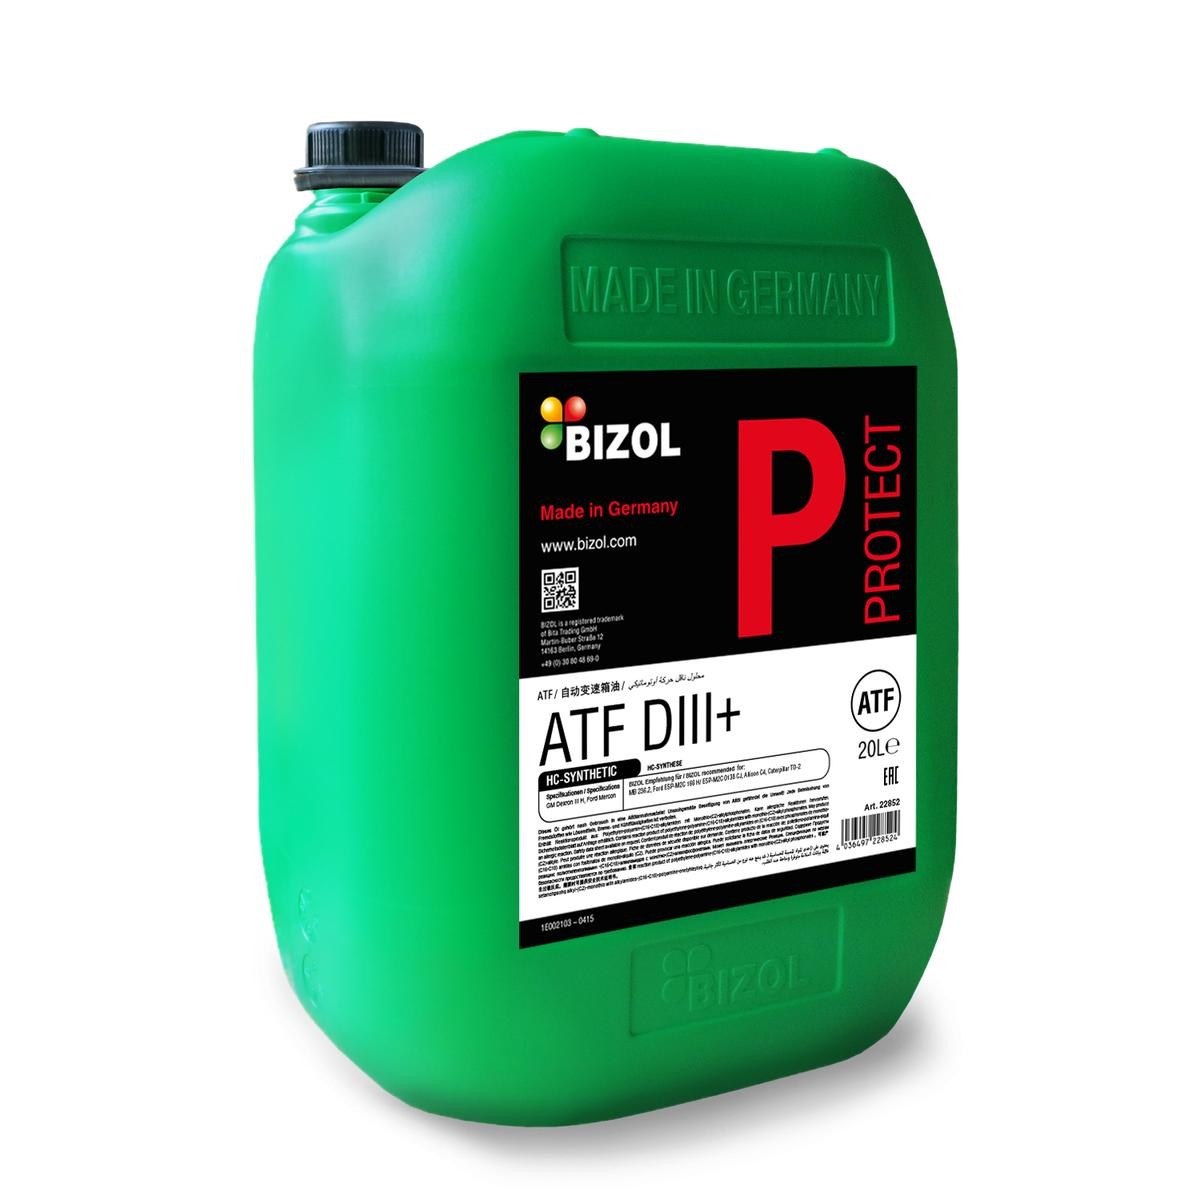 BIZOL Protect, ATF D-III+ 22852 Olio cambio automatico (ATF)